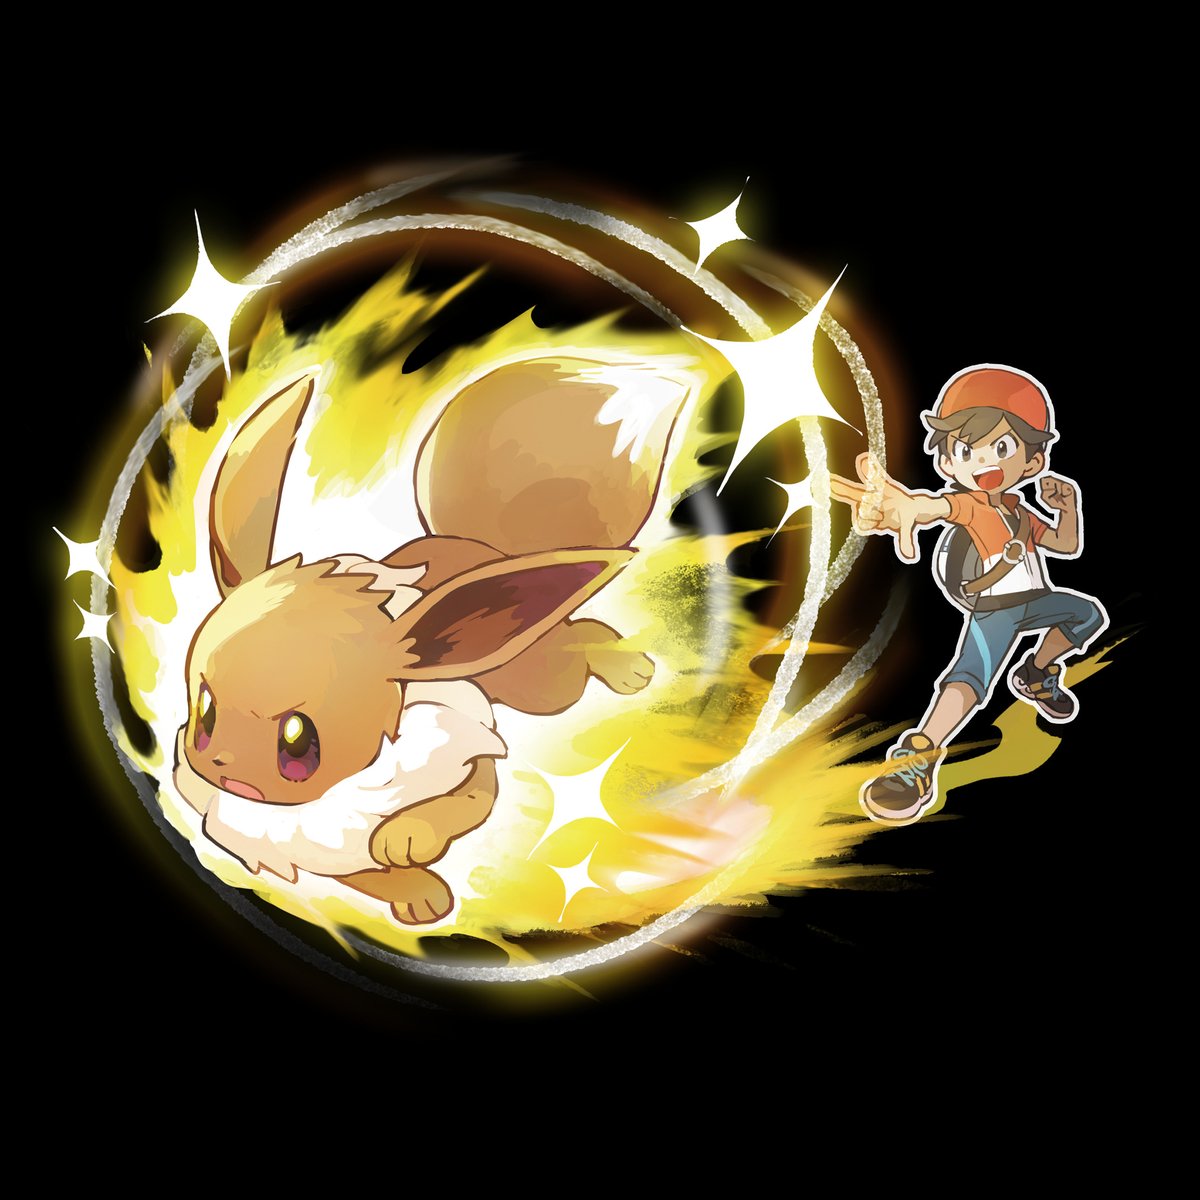 Official Artwork And Details For Pokémon Lets Go Pikachu